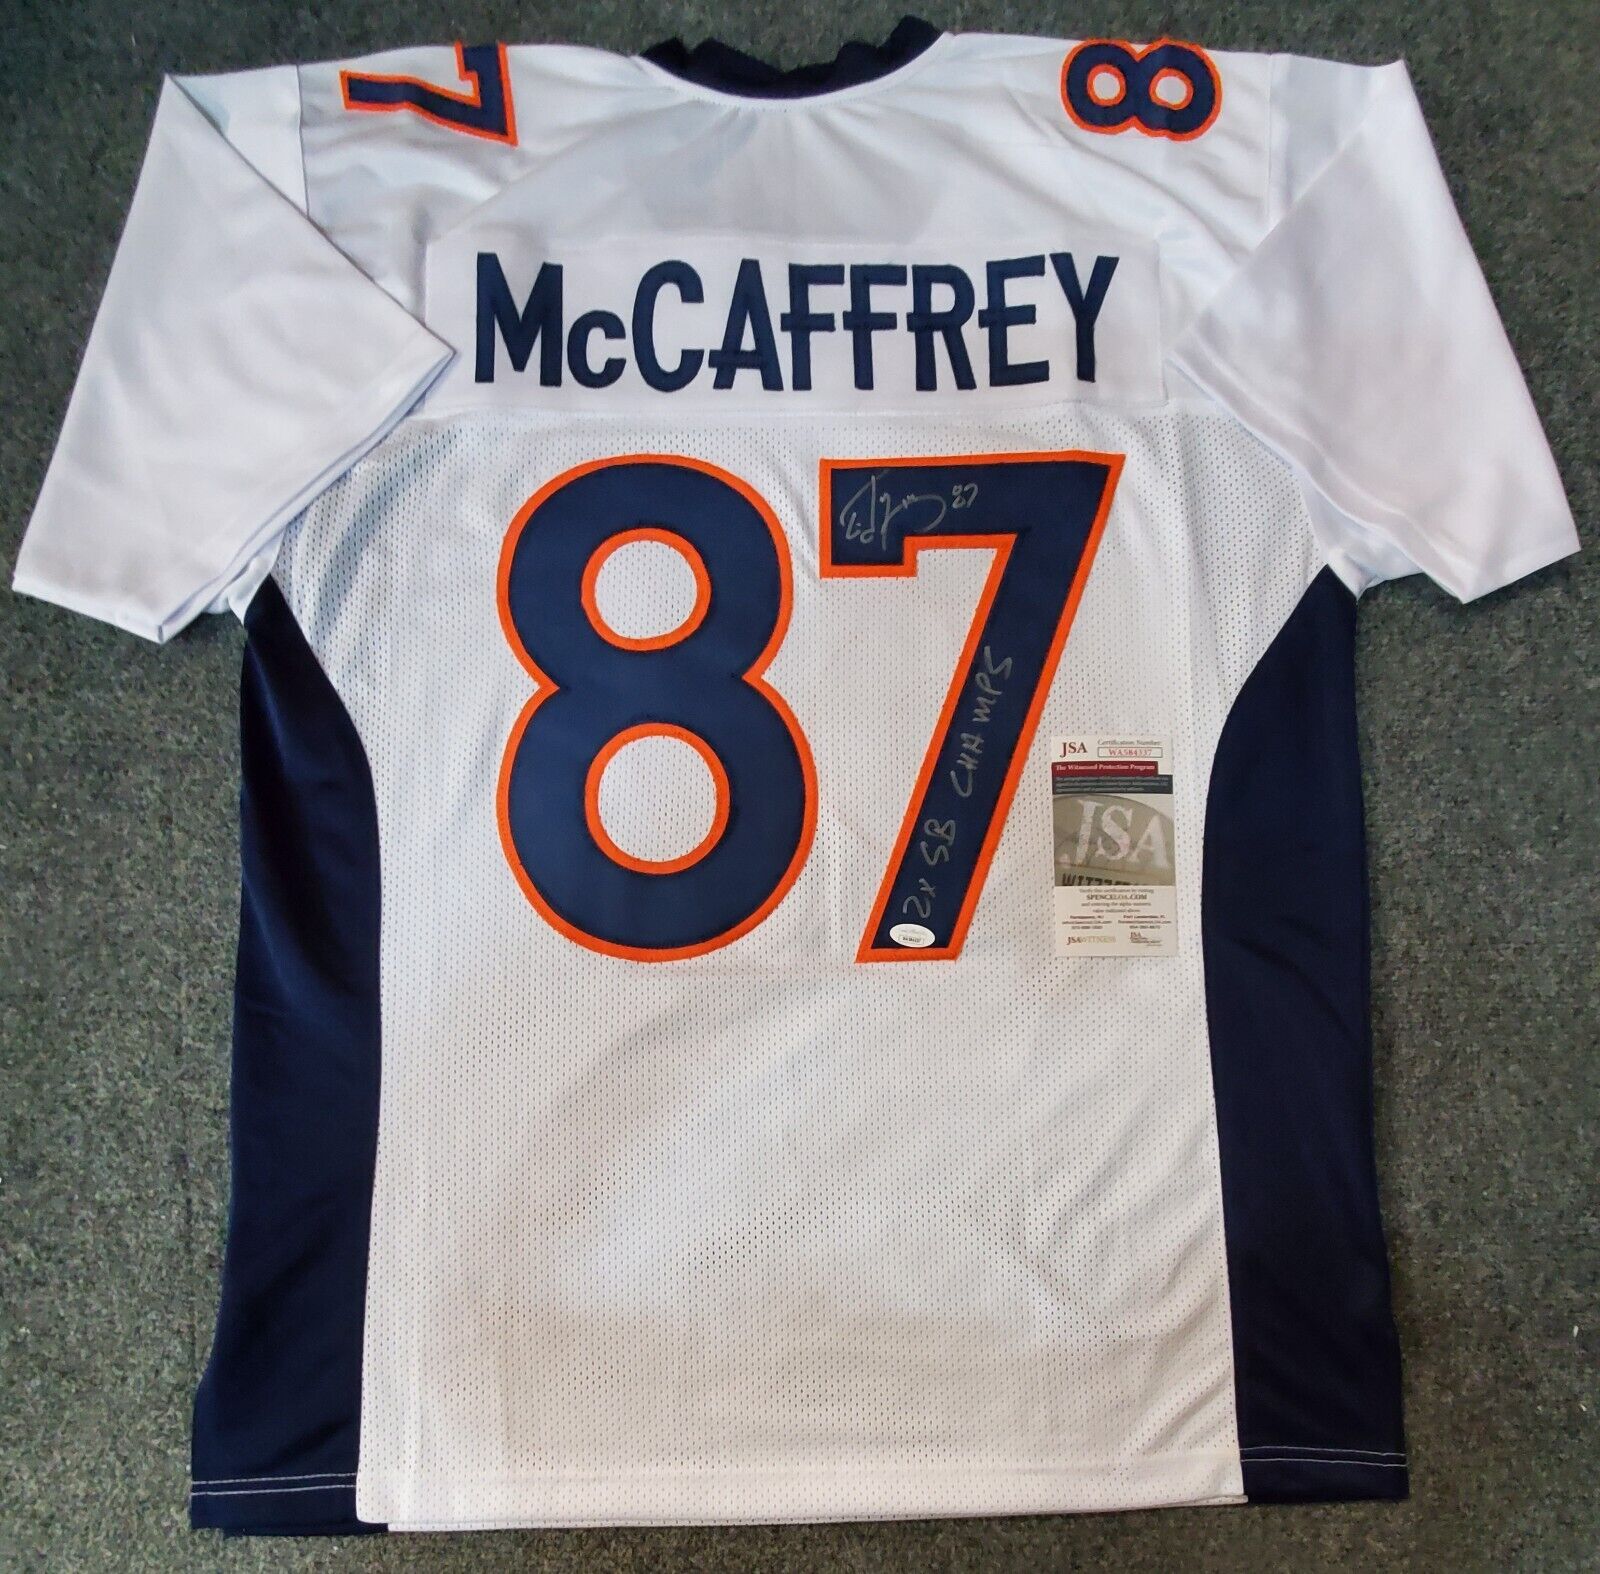 mccaffrey jersey white